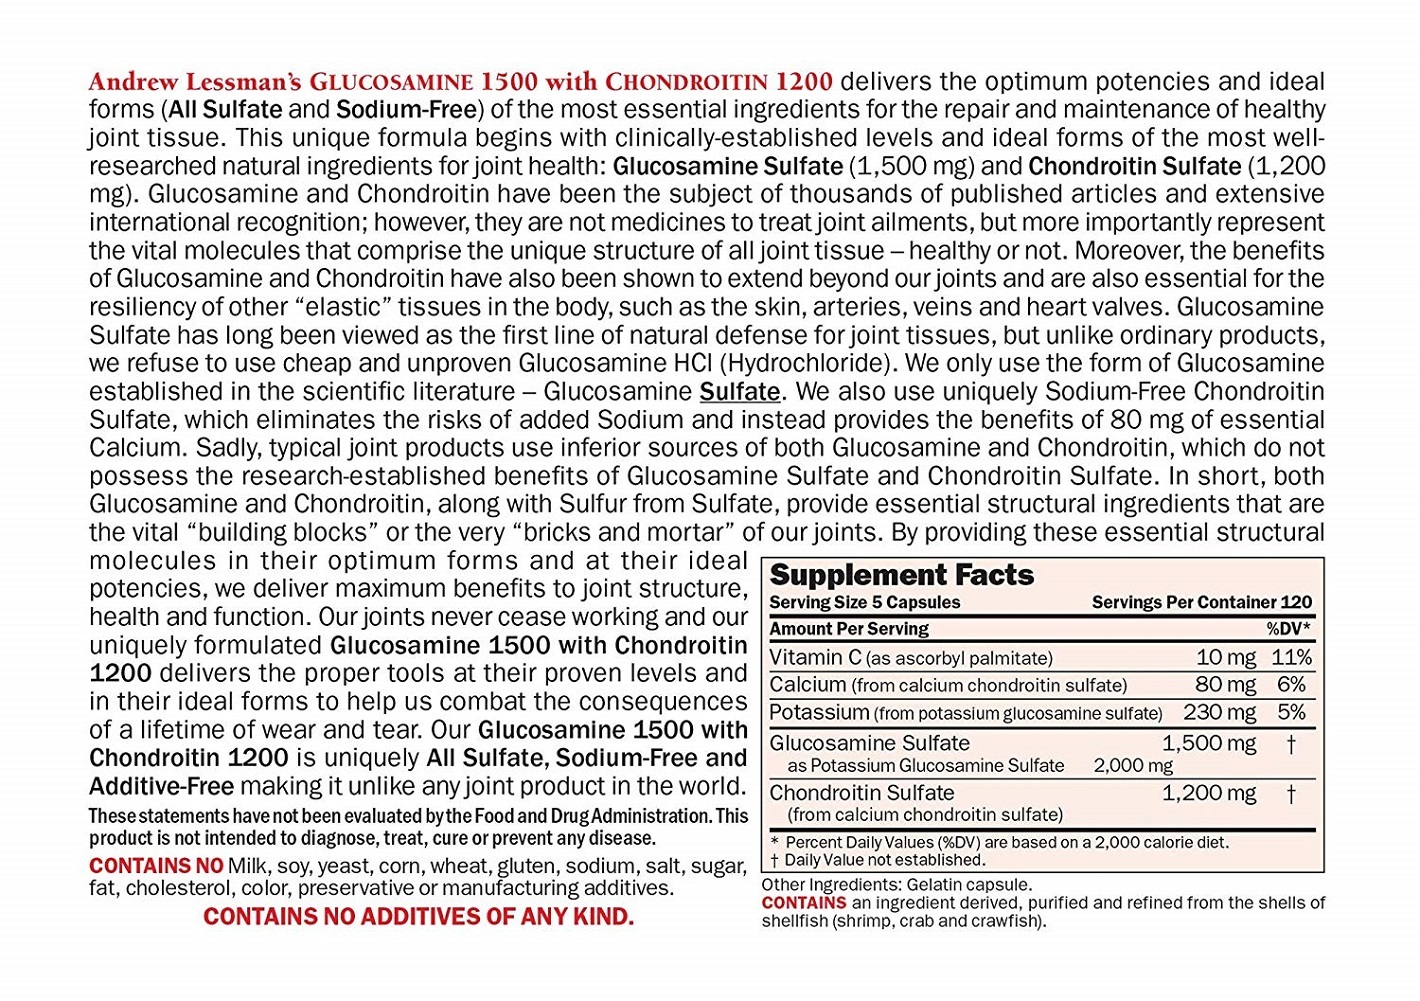 Andrew Lessman Glucosamine 1500 Chondroitin 1200-75 Capsules – 100% Sulfate Form